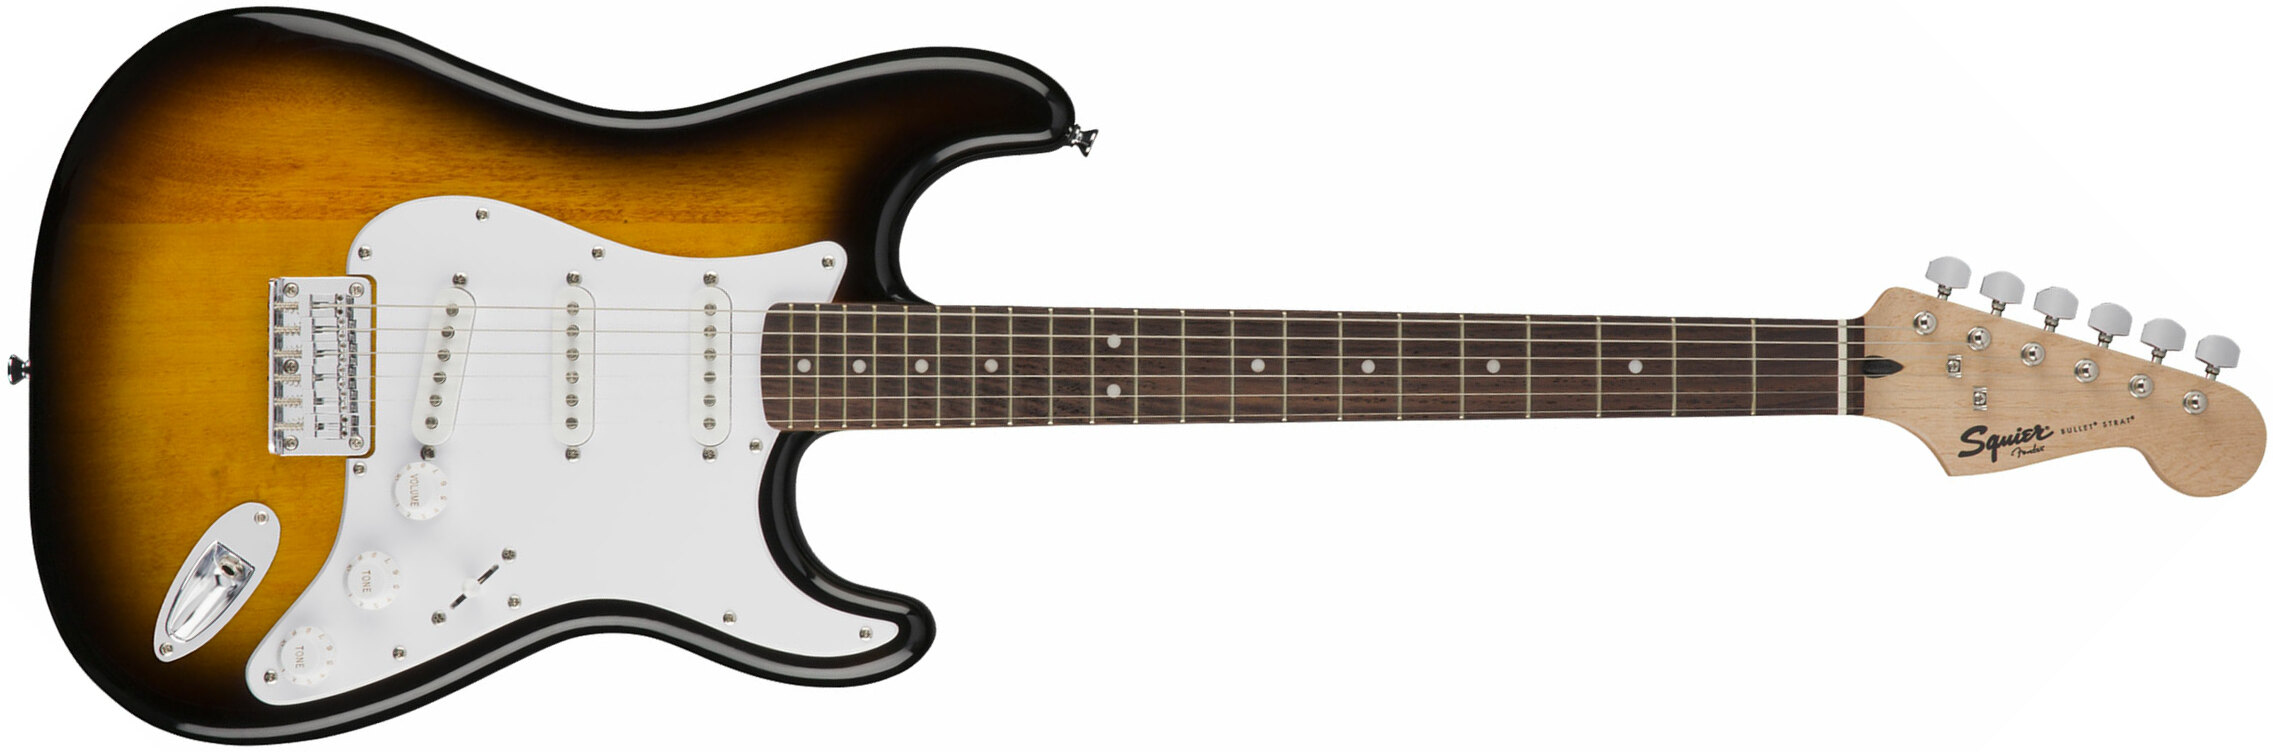 Squier Bullet Stratocaster Ht Sss Rw - Brown Sunburst - Str shape electric guitar - Main picture